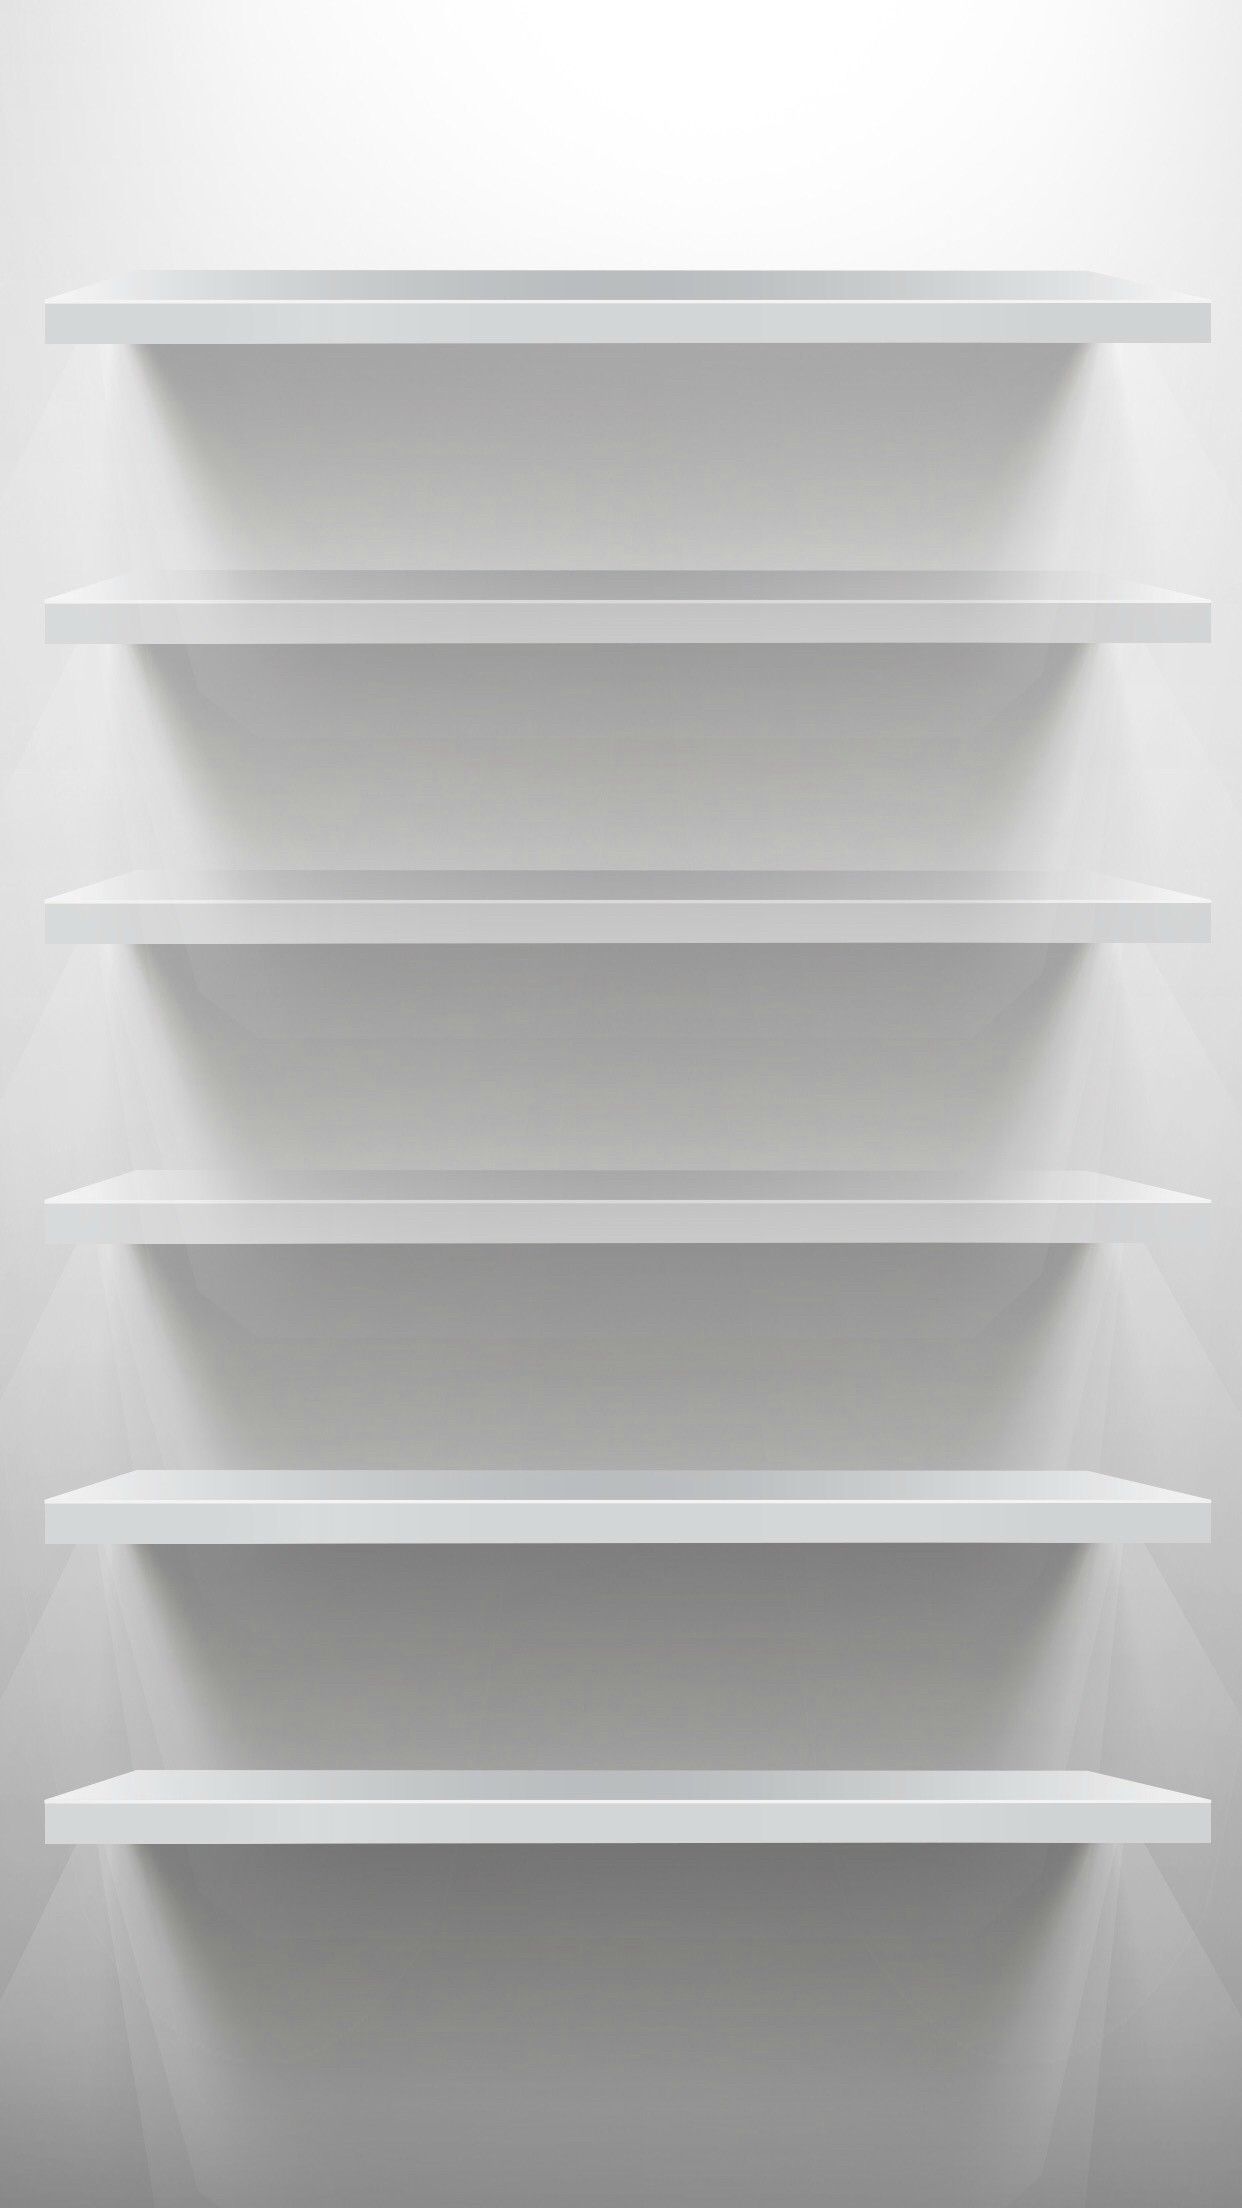 Creative Shelves Wallpaper for the iPhone 6 Plus!. iPhone 7 plus wallpaper, Wallpaper shelves, iPhone homescreen wallpaper